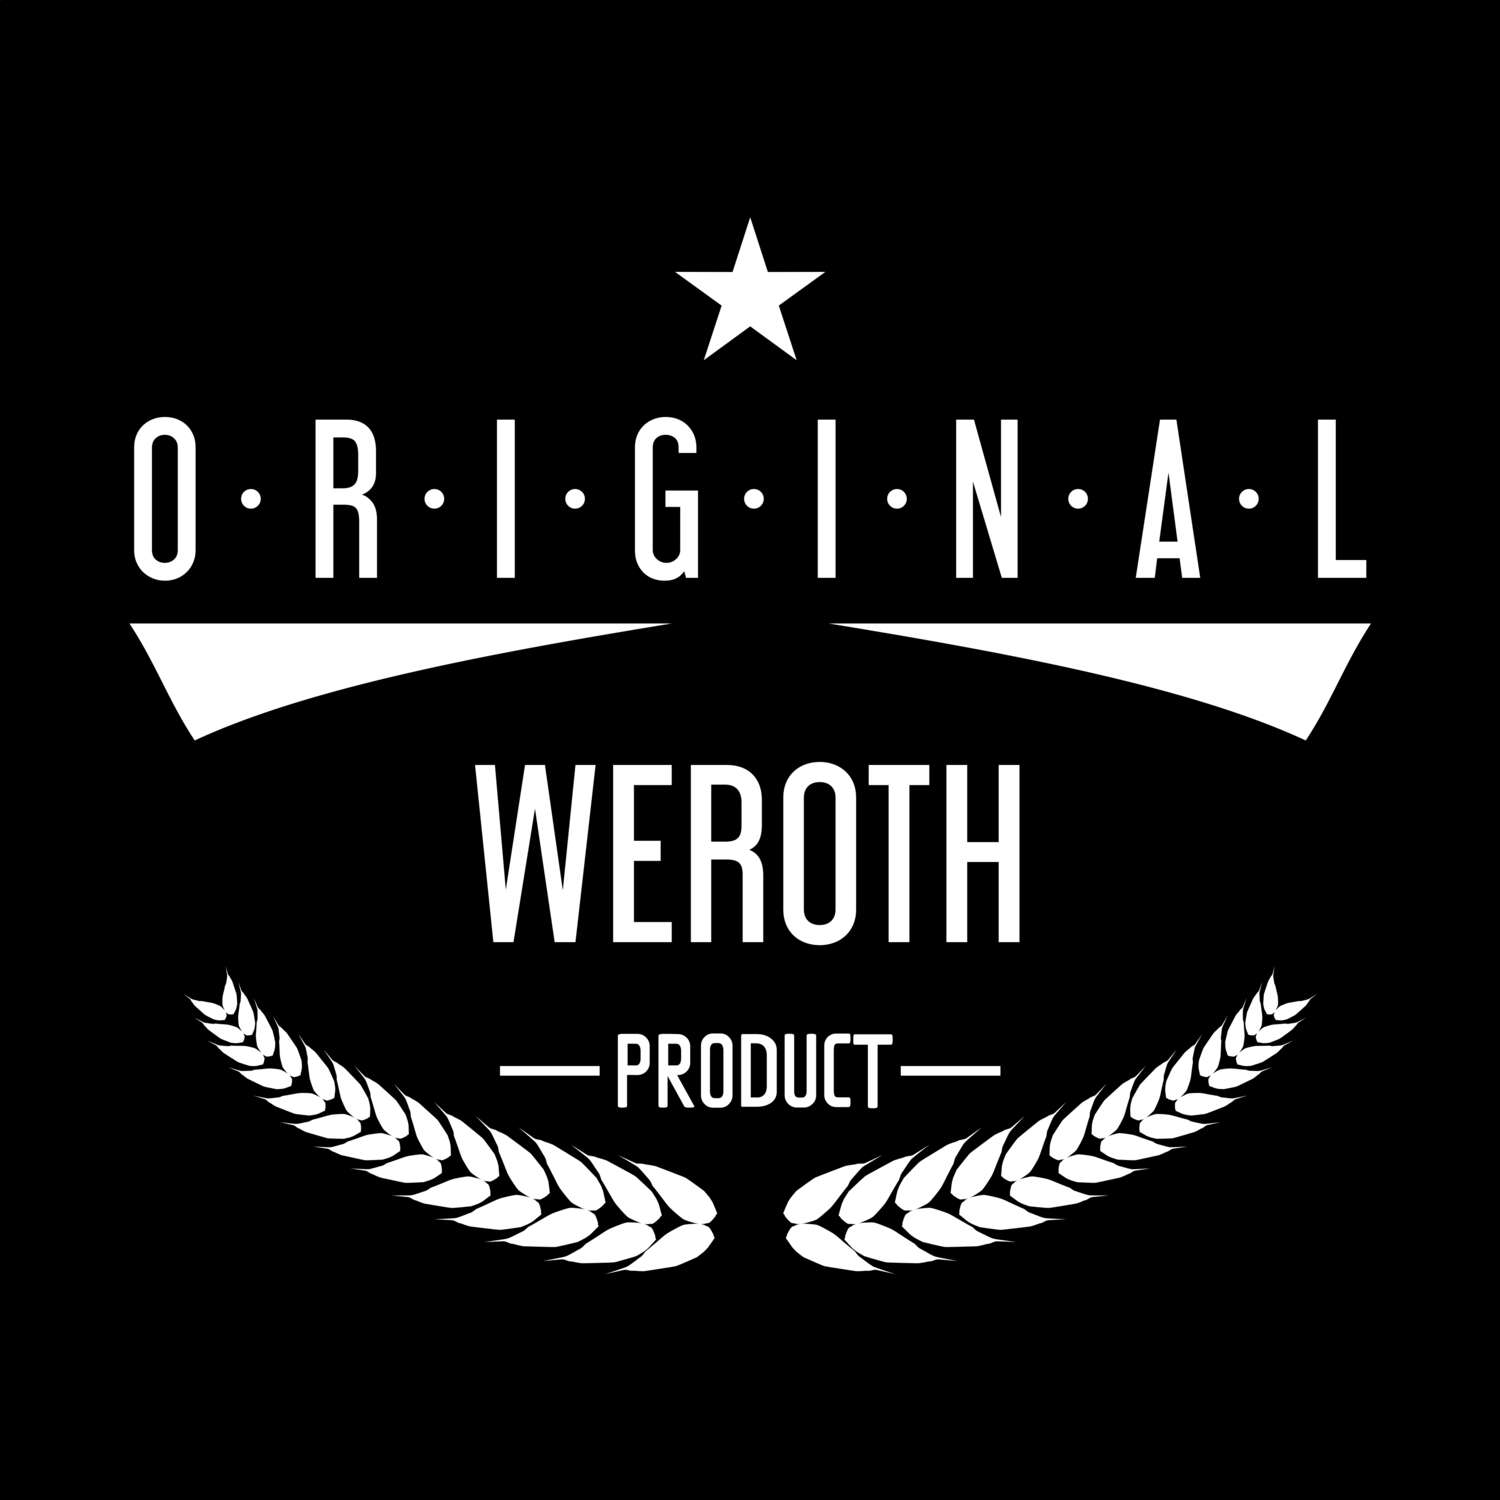 Weroth T-Shirt »Original Product«